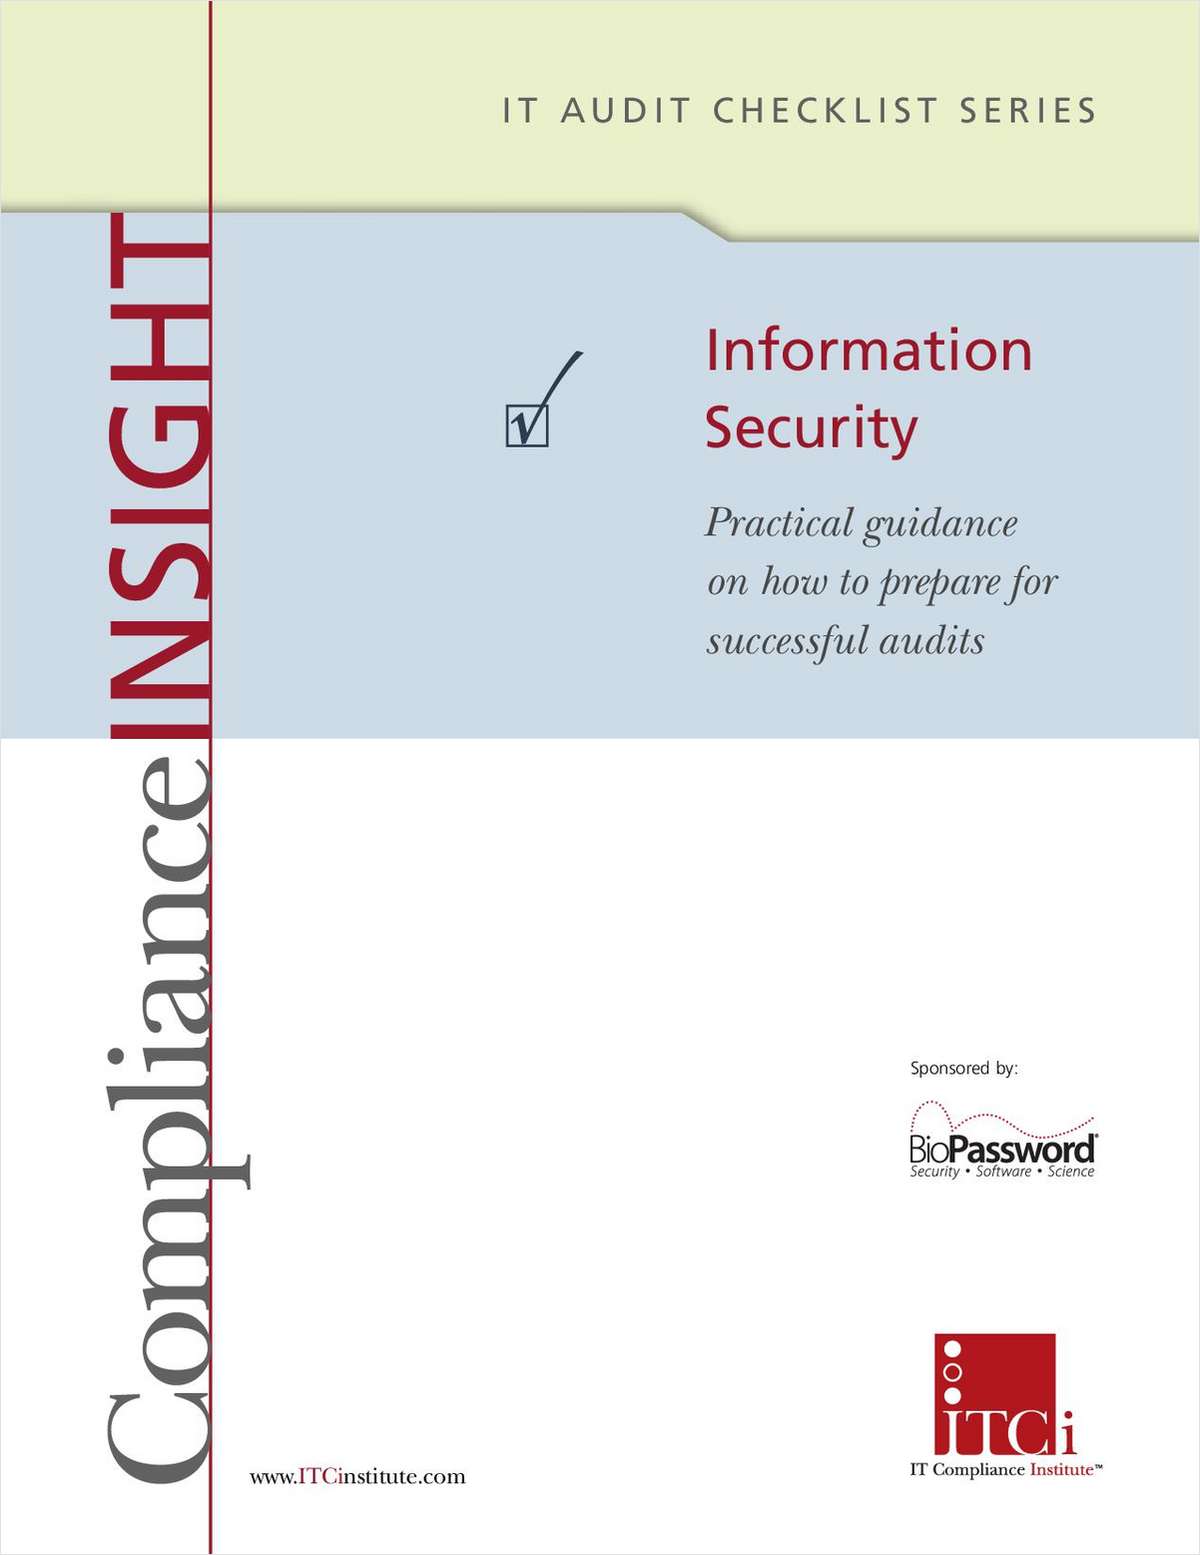 IT Audit Checklist: Information Security